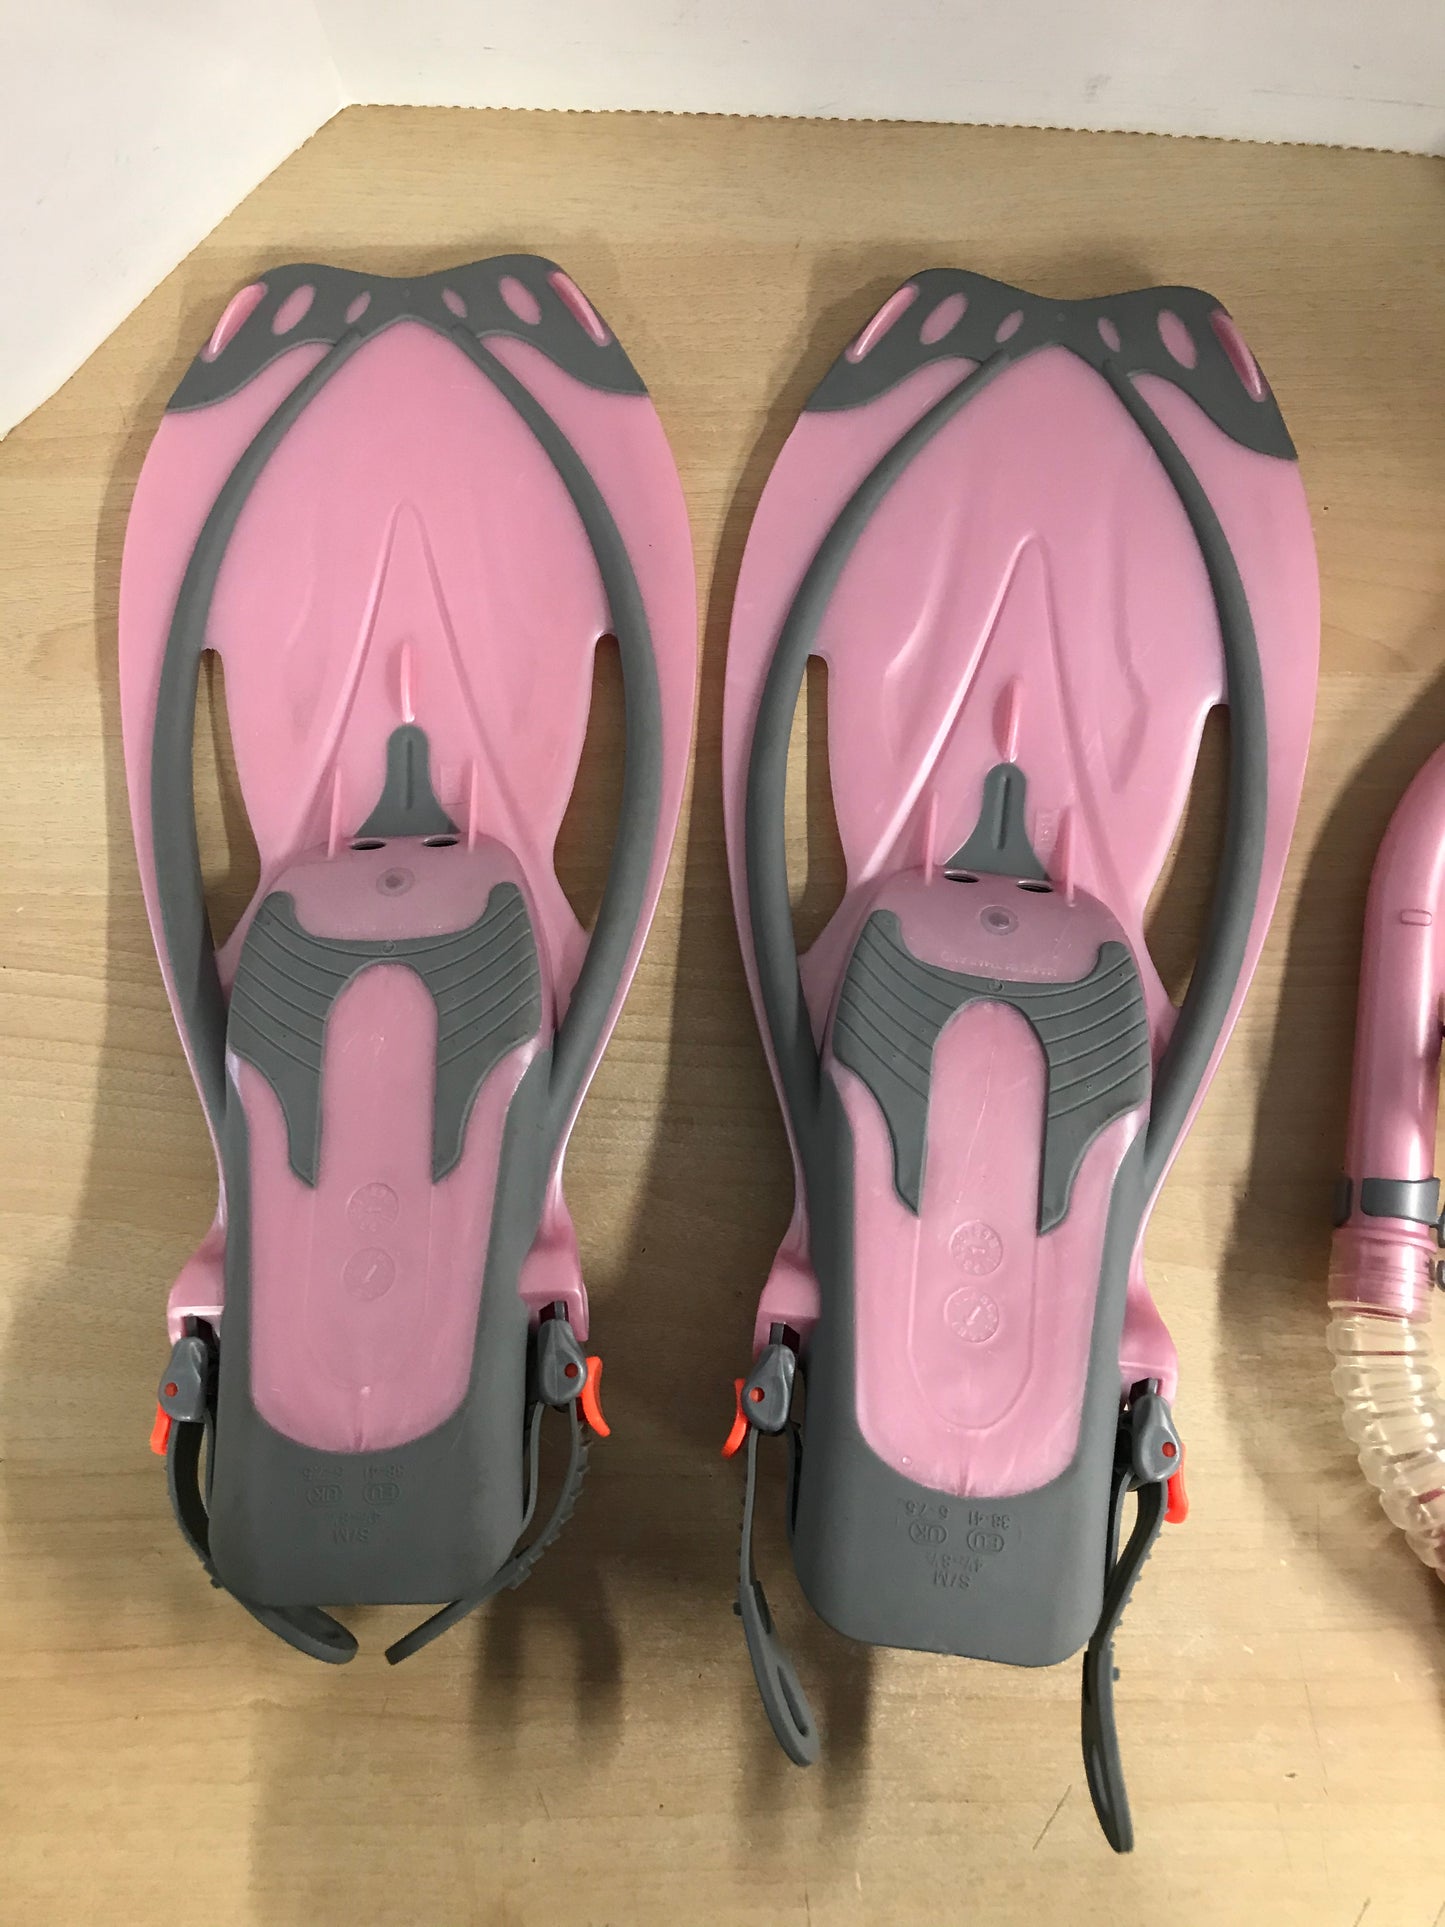 Snorkel Dive Fins Set Ladies Shoe Size 4.5-8.5 US Divers Pink Grey New Demo Model Excellent